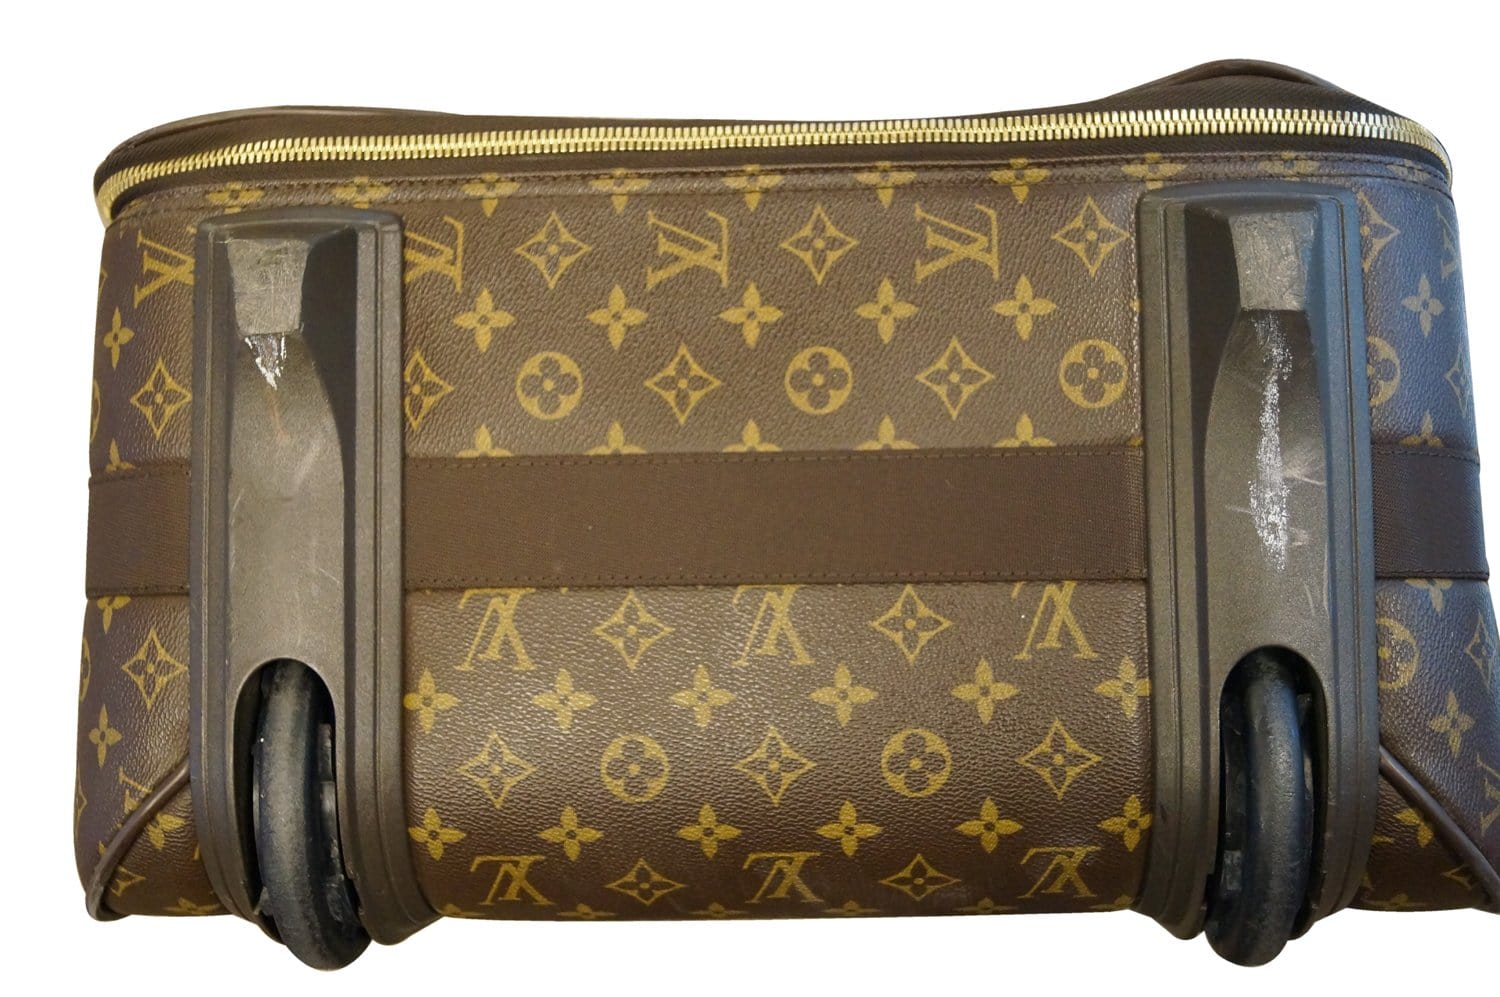 Louis Vuitton Pegase 65 Rolling Suitcase for Sale in Albuquerque